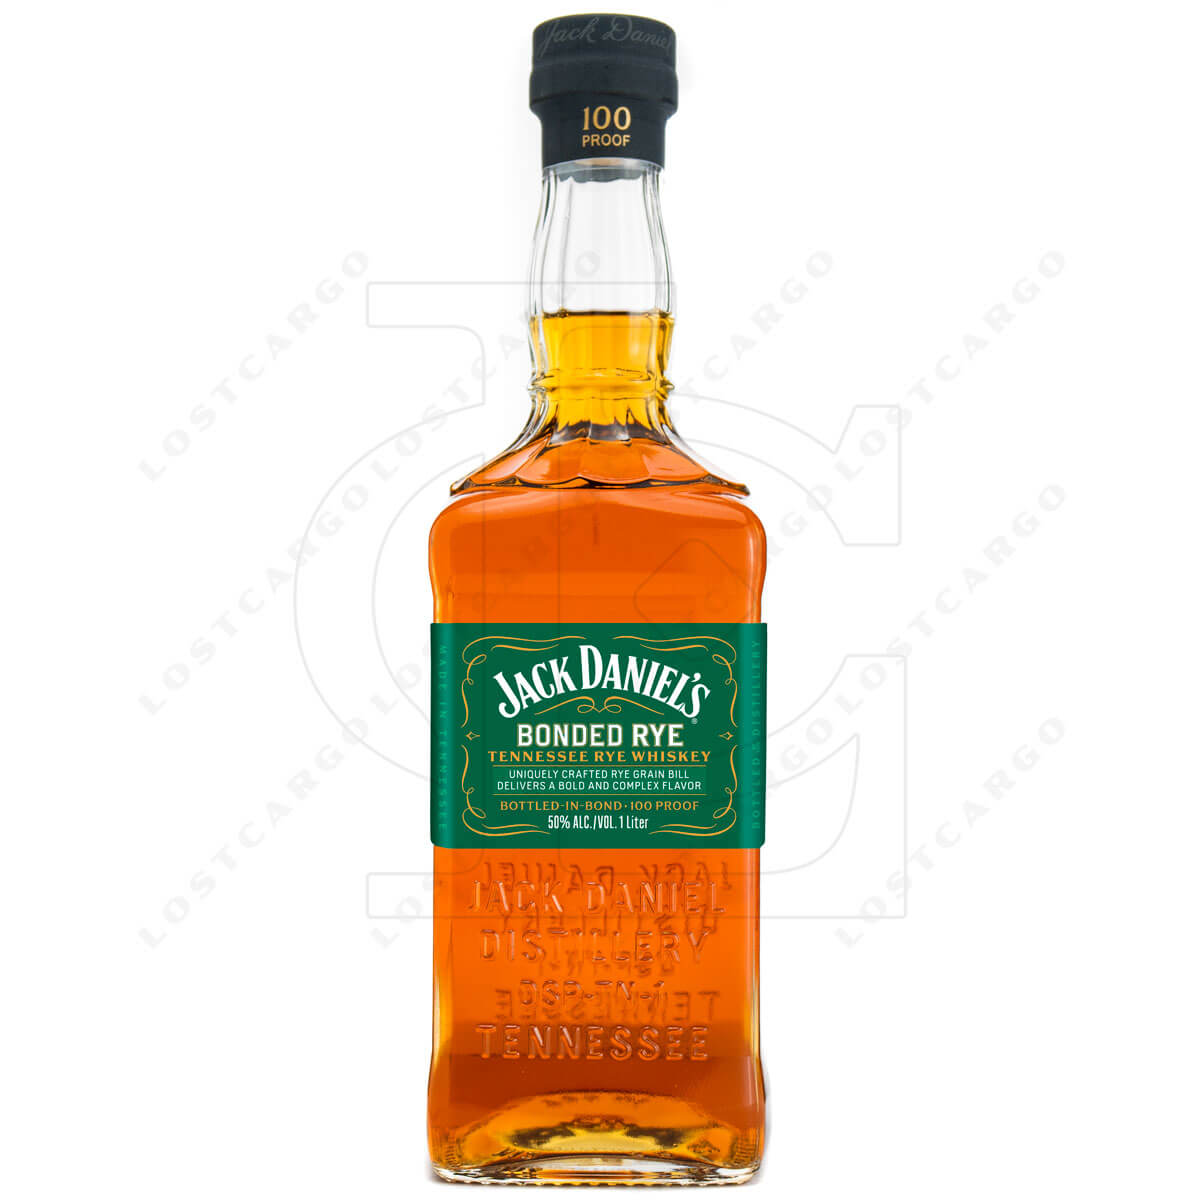 Jack Daniel's Bonded Rye bottle